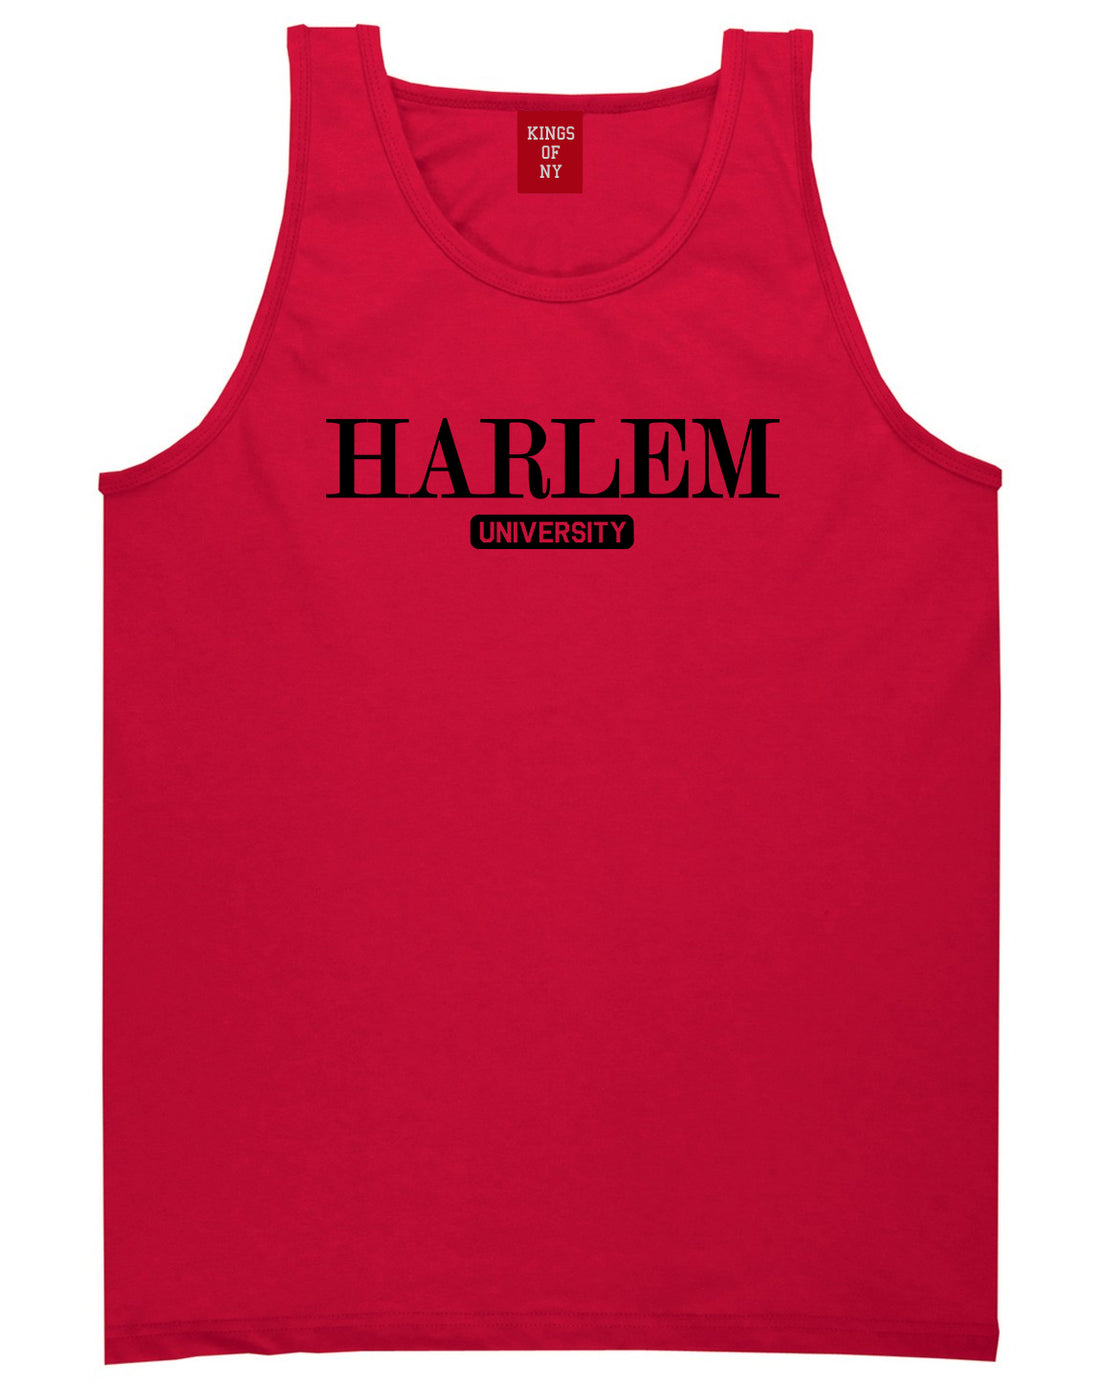 Harlem University New York Mens Tank Top T-Shirt Red